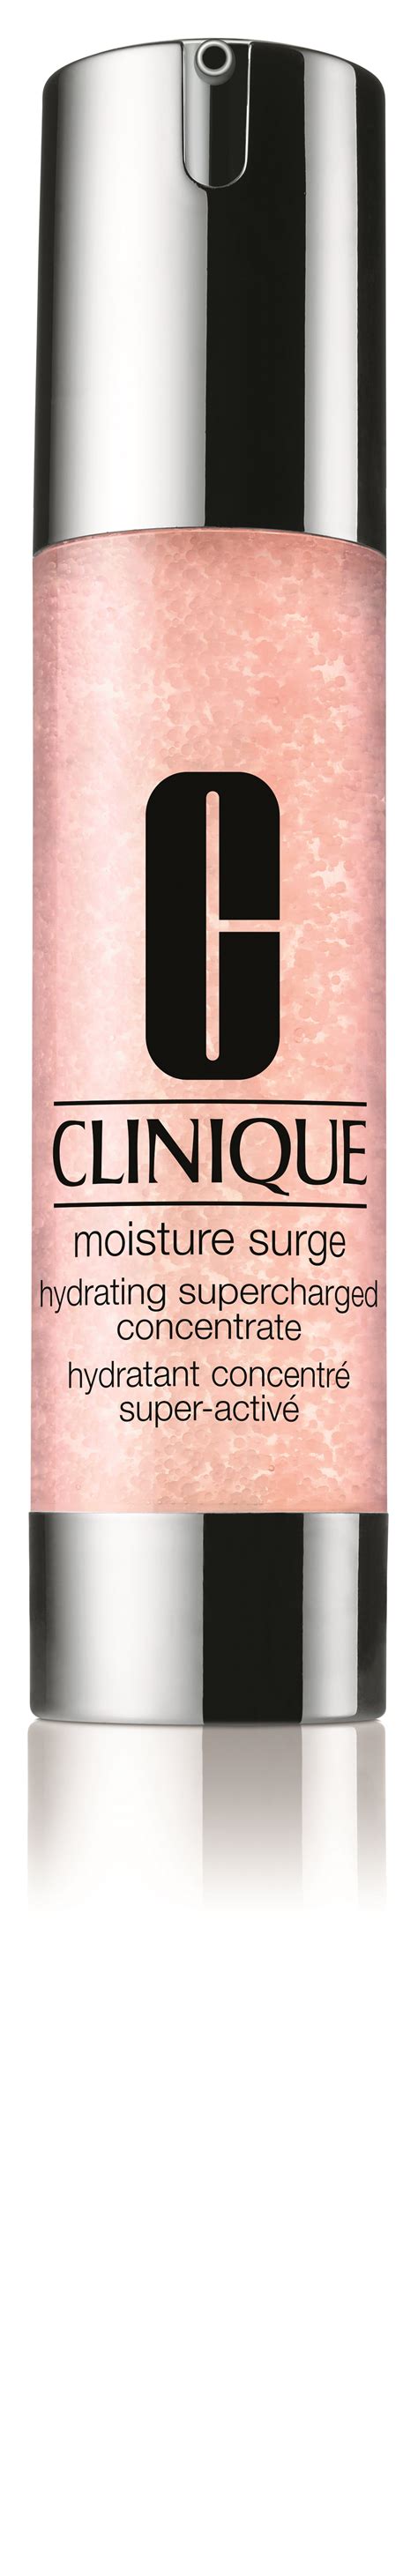 clinique moisture surge hydraterend serum ml kopen beauty plaza